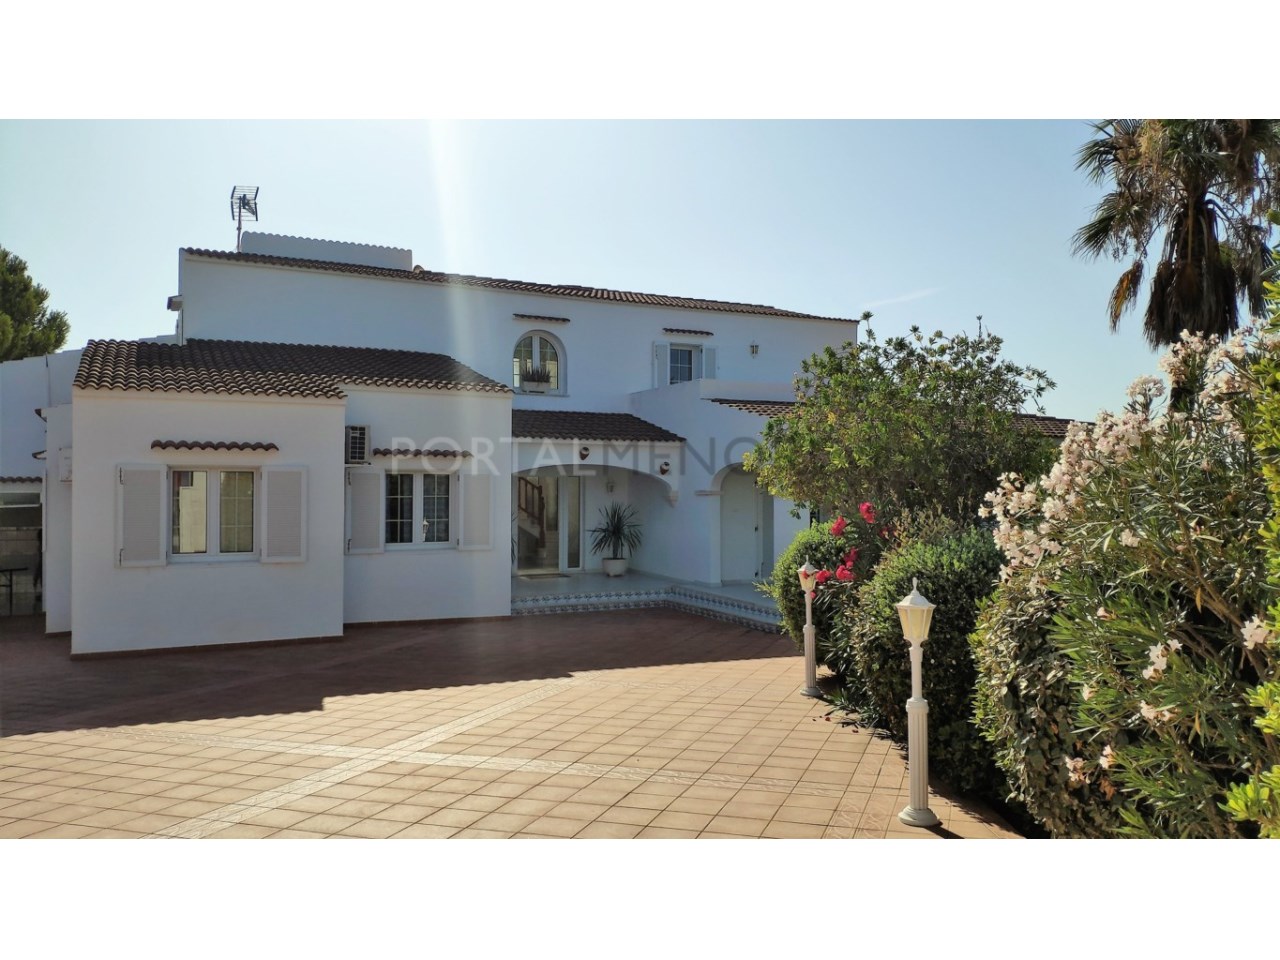 Villa for sale in Calan Blanes with a tourist license Ciutadella Menorca-Facade